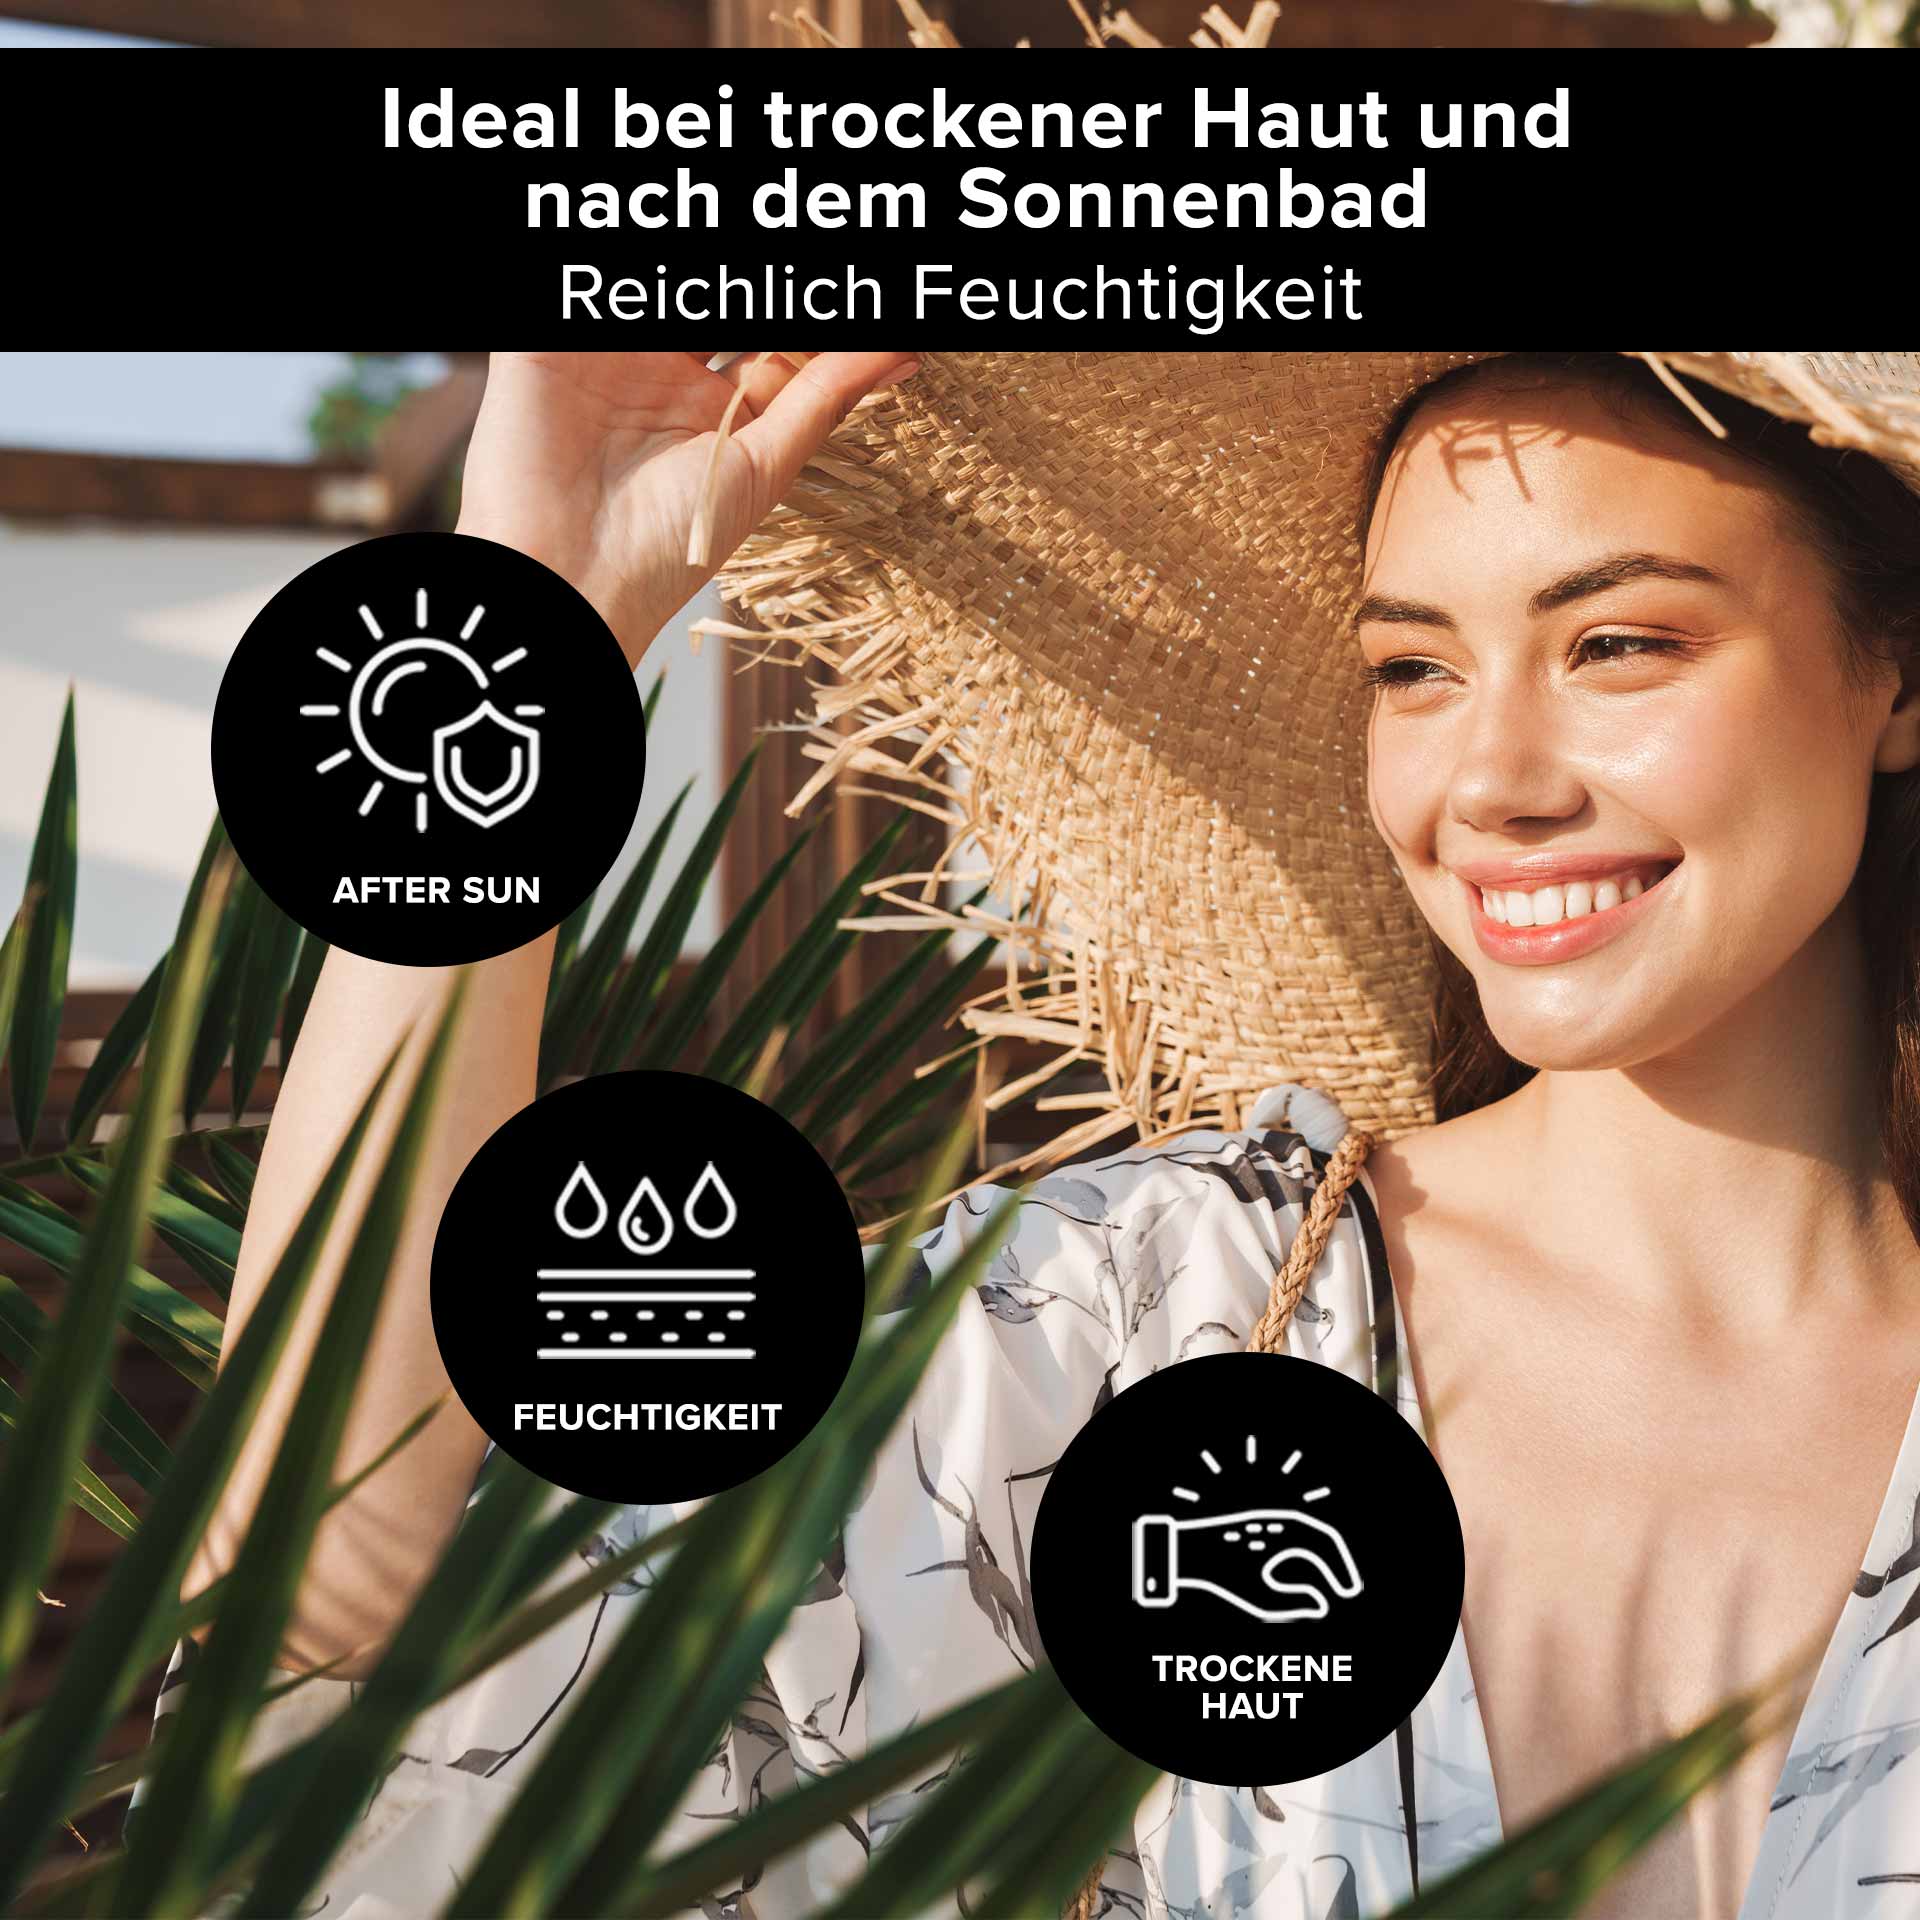 RAU Cosmetics Sommer Set: Sonnencreme mit LSF 50 & Aloe Vera Face & Body After Sun